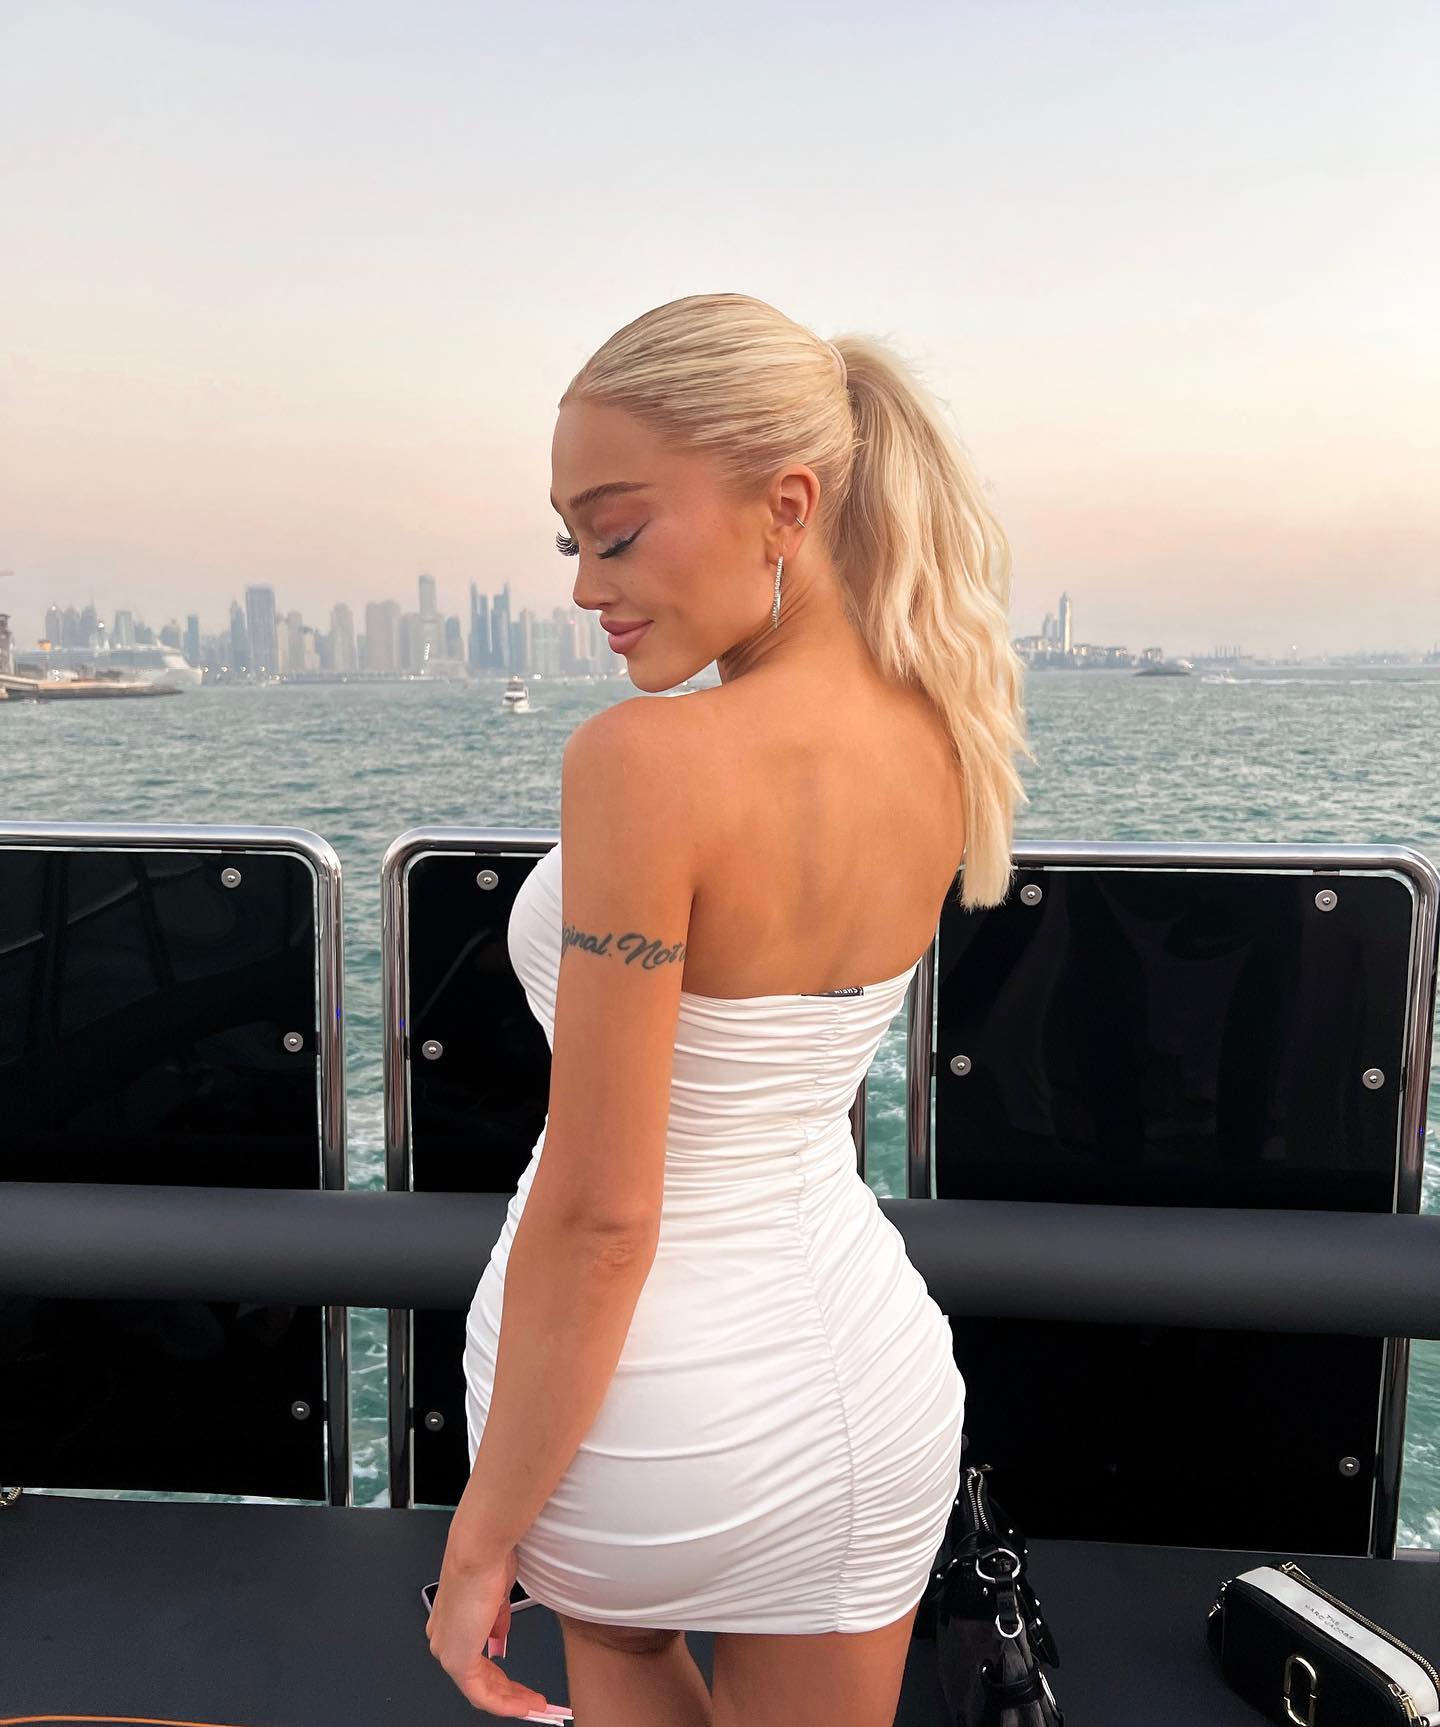 Dubai Bling ✨ #dubailife #yachtday #blondegirl